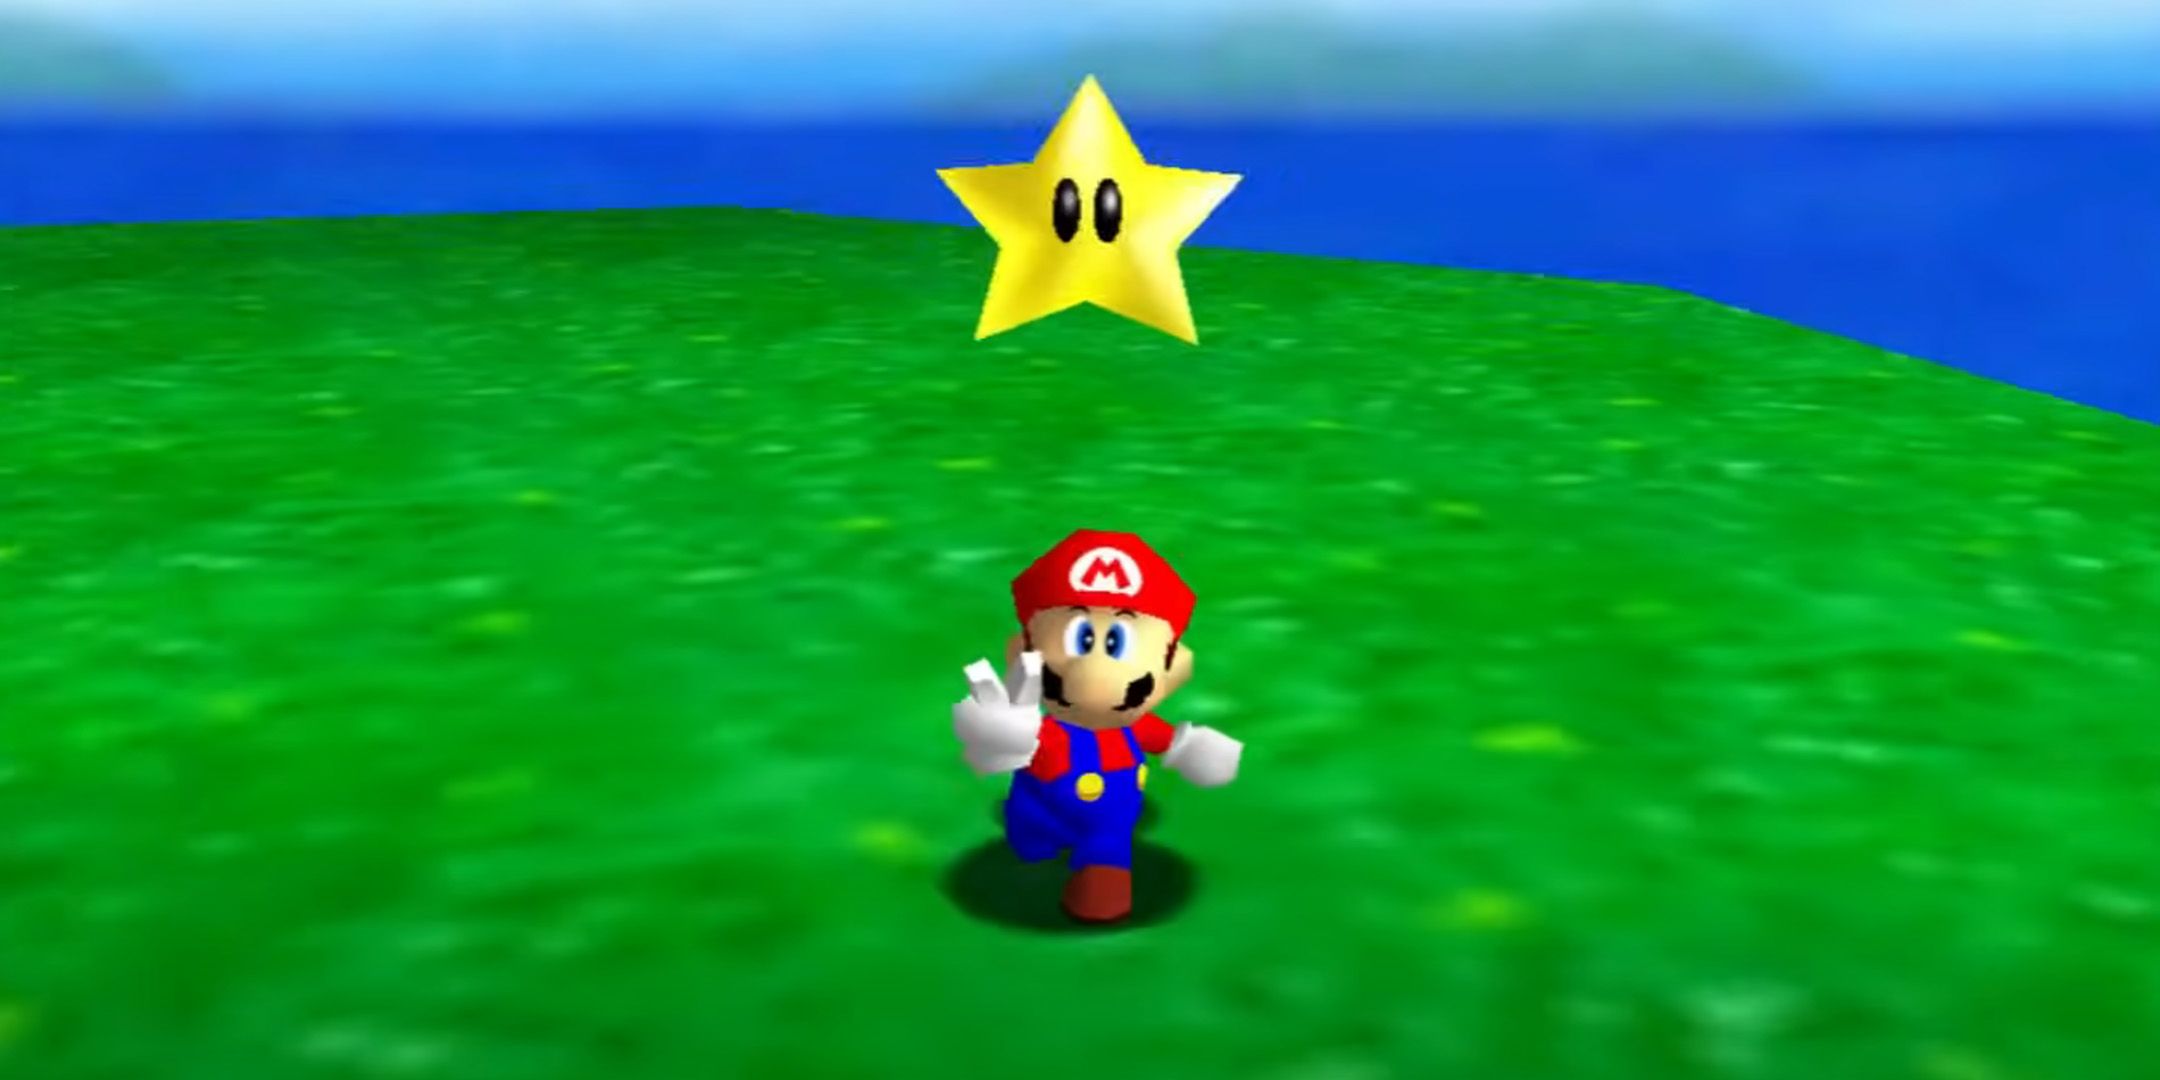 Mario collecting a star in Super Mario 64